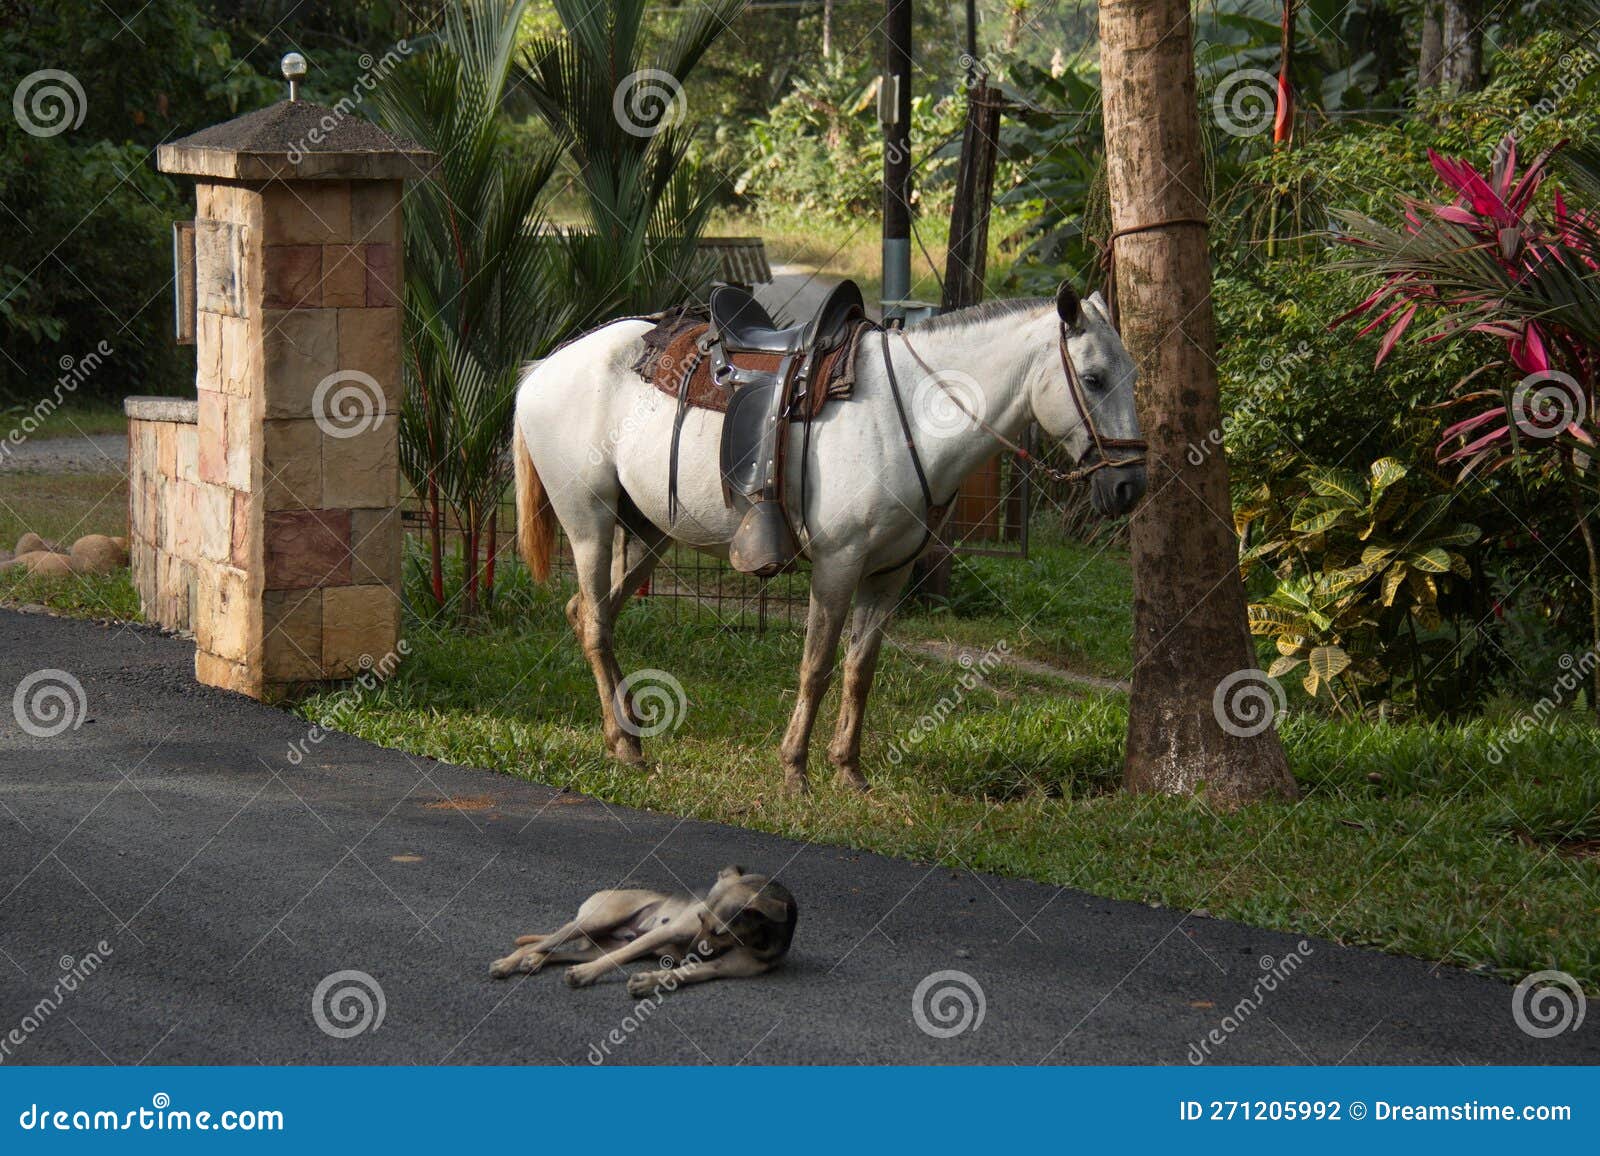 saddled horse and lying dog in pedacito de cielo near boca tapada in costa rica